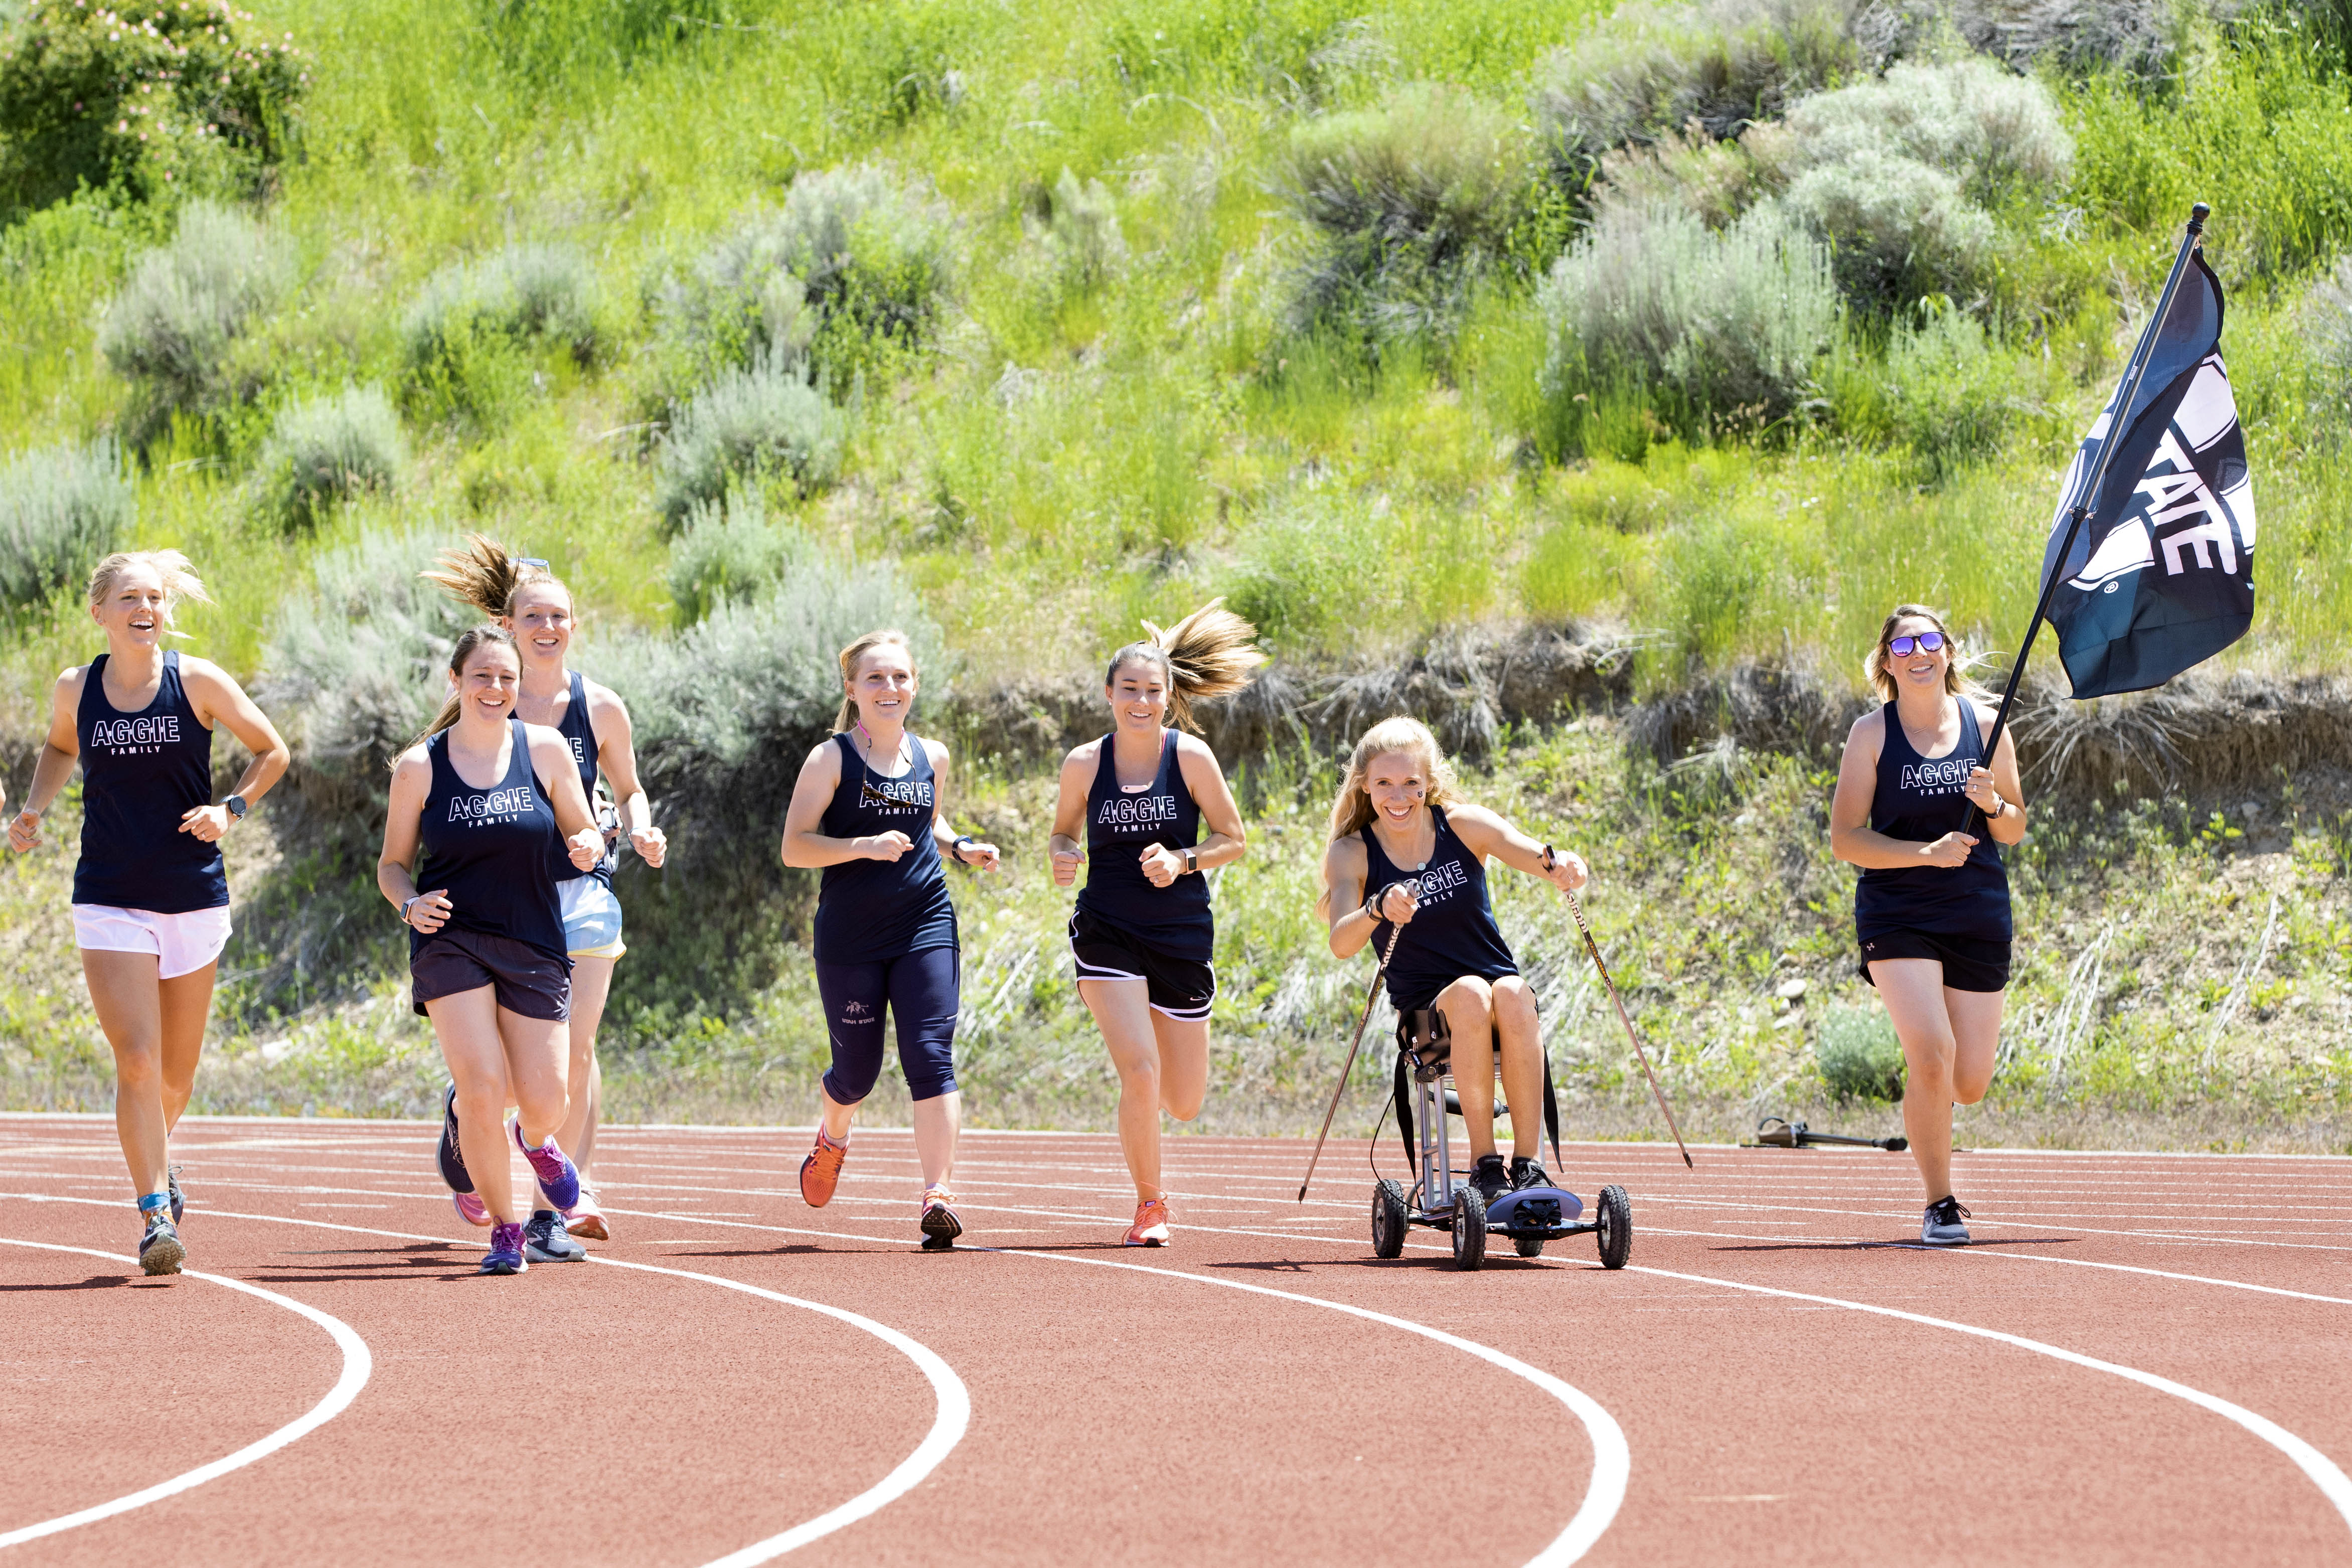 Former Members of the USU women's track team run around the track.